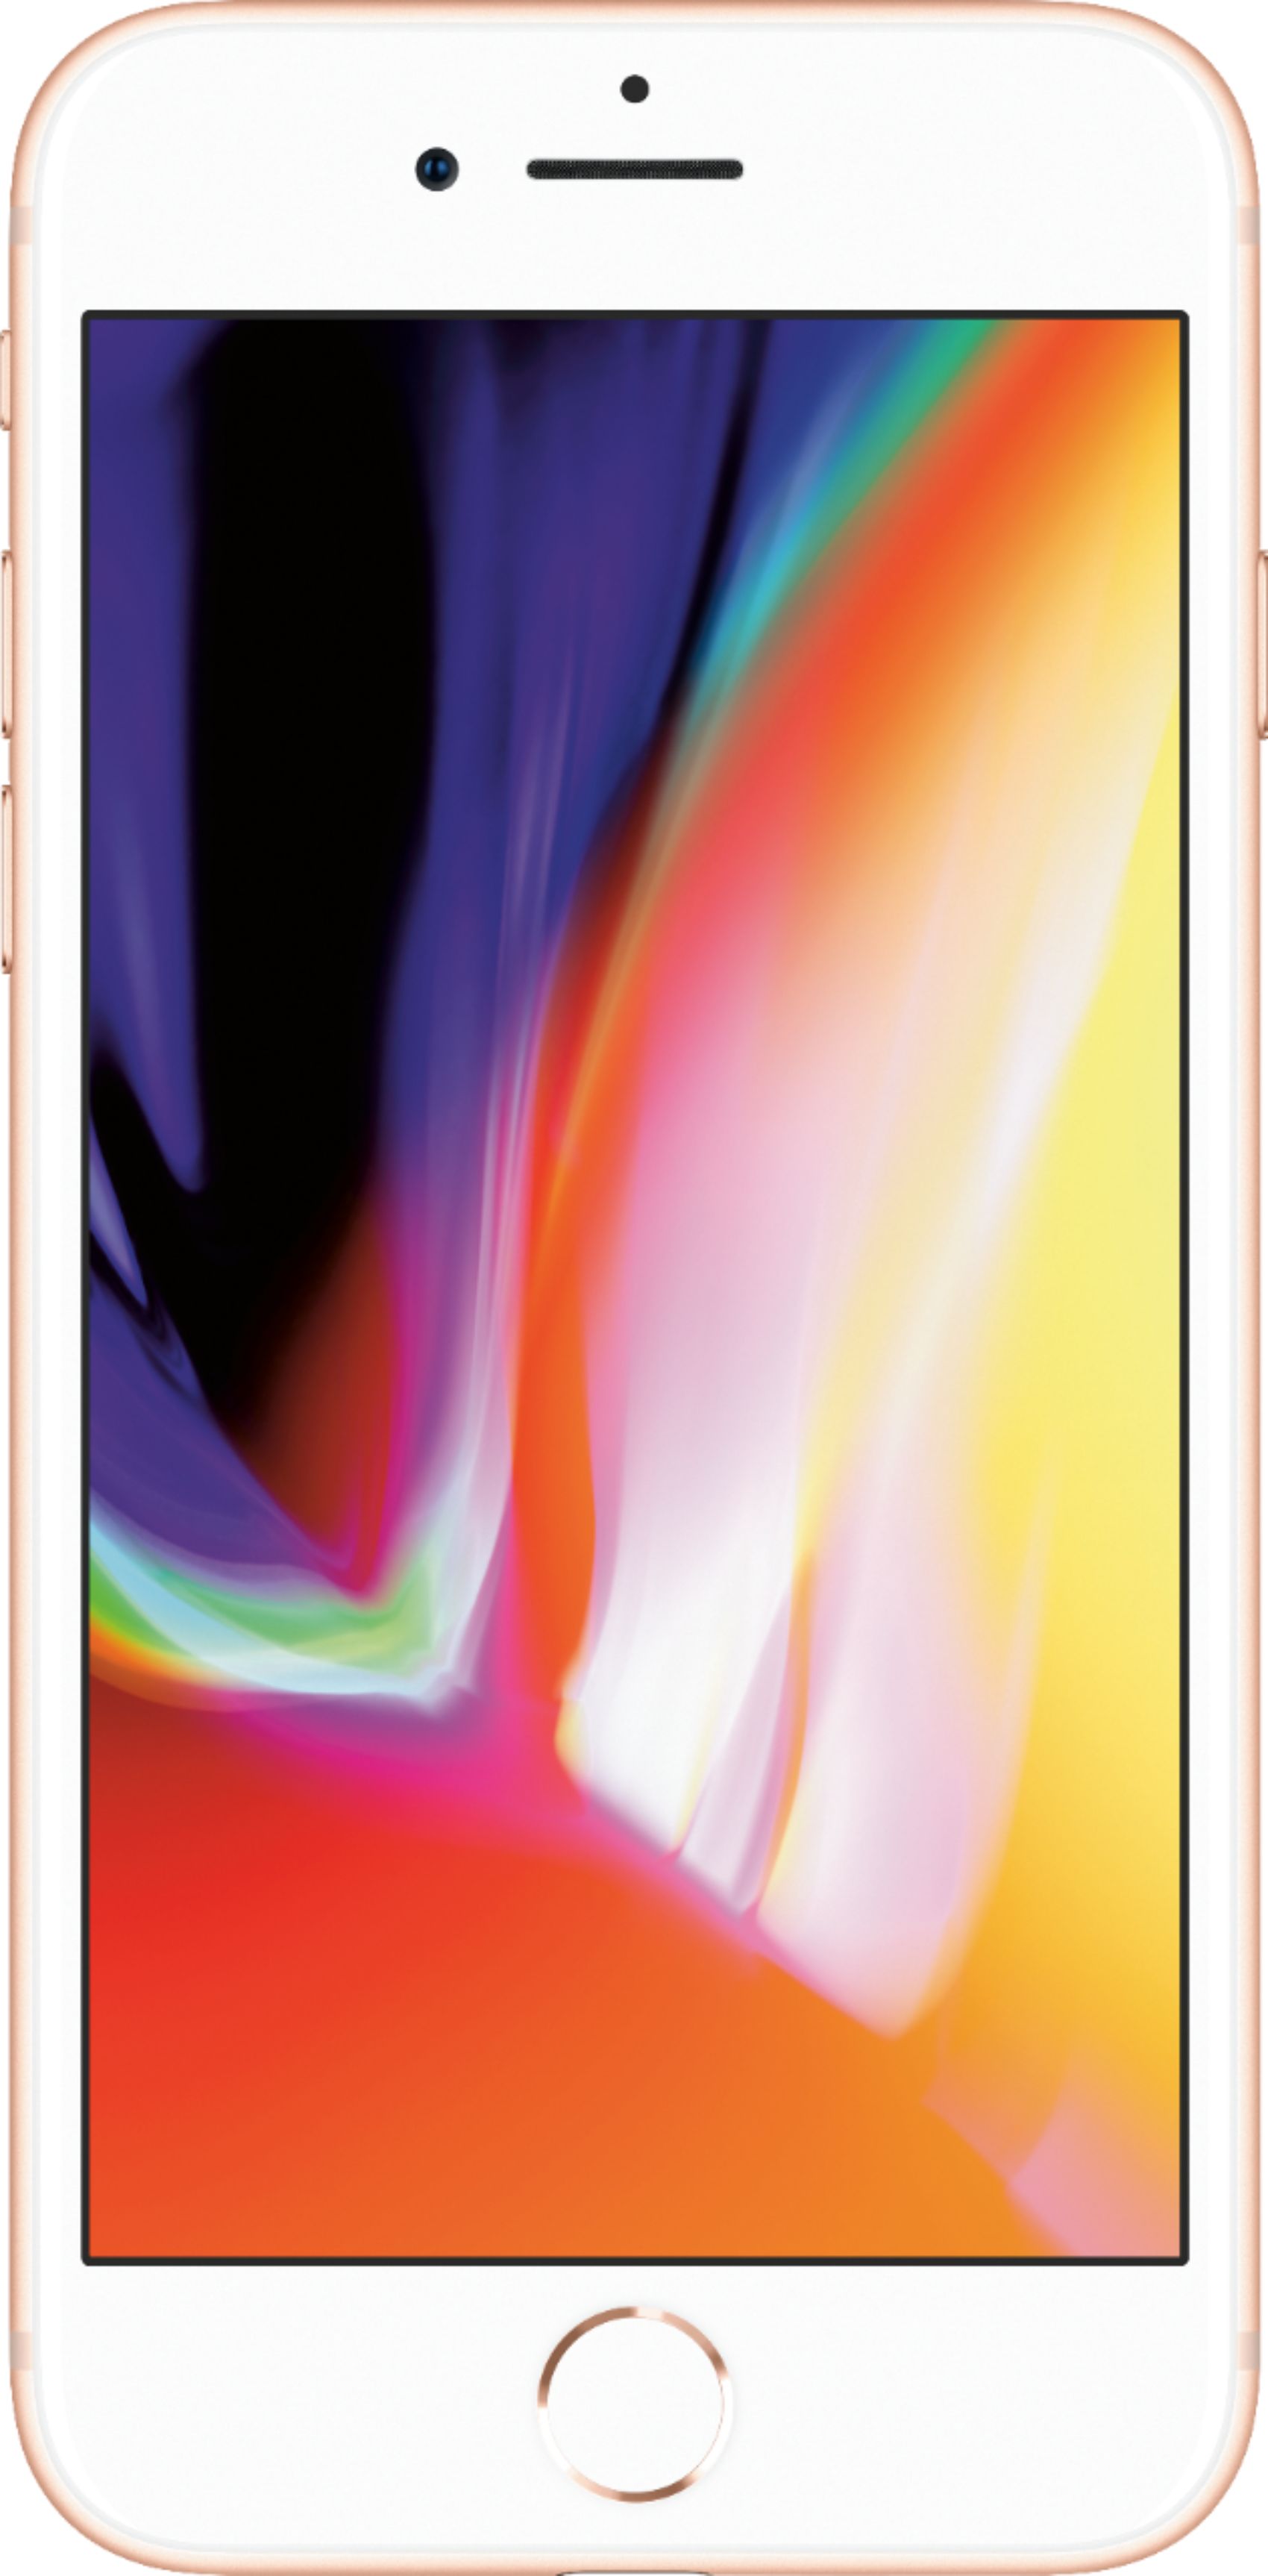 Apple iPhone 8 64GB Gold (Verizon) MQ6M2LL/A - Best Buy